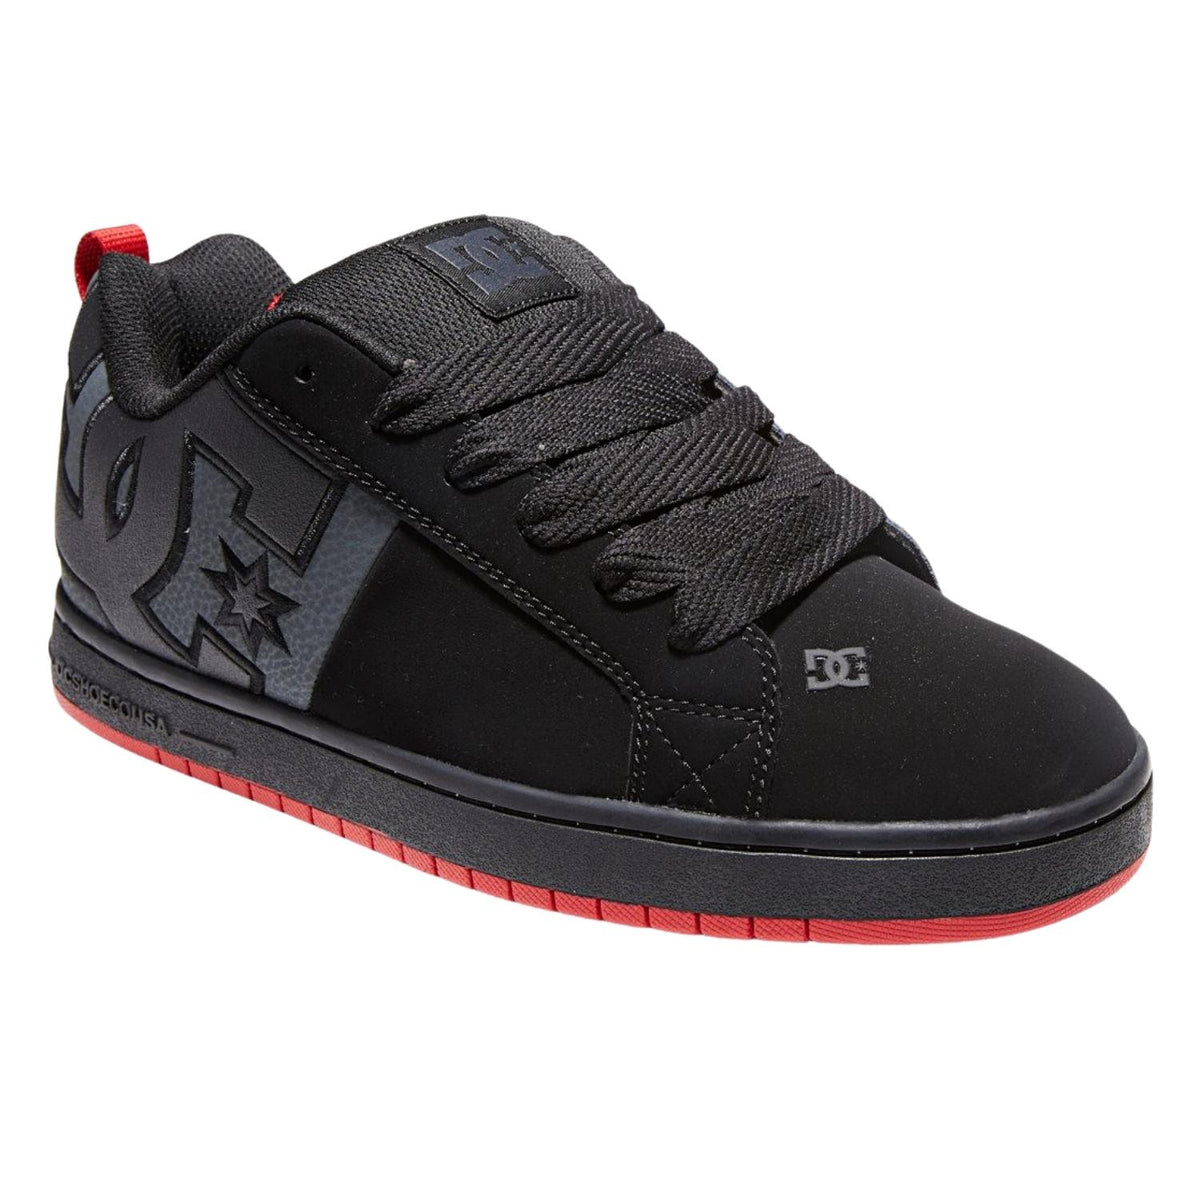 DC Court Graffik SQ Shoes - Black/Grey/Red - Mens Skate Shoes by DC